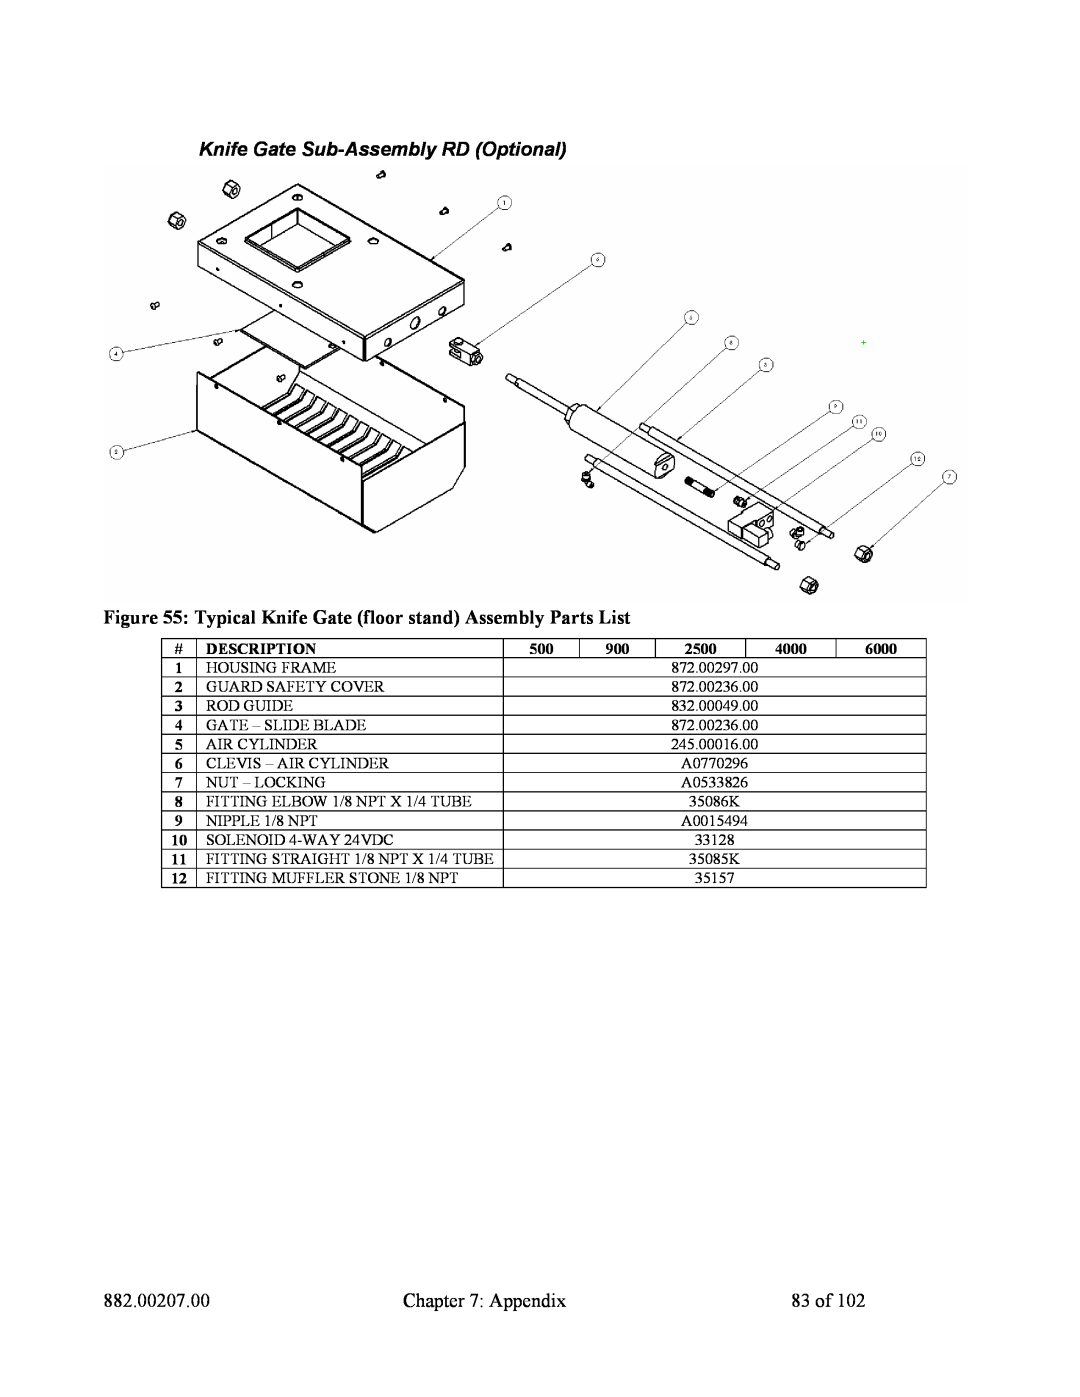 Mitsubishi Electronics 882.00207.00 specifications Knife Gate Sub-AssemblyRD Optional, Appendix, 83 of 